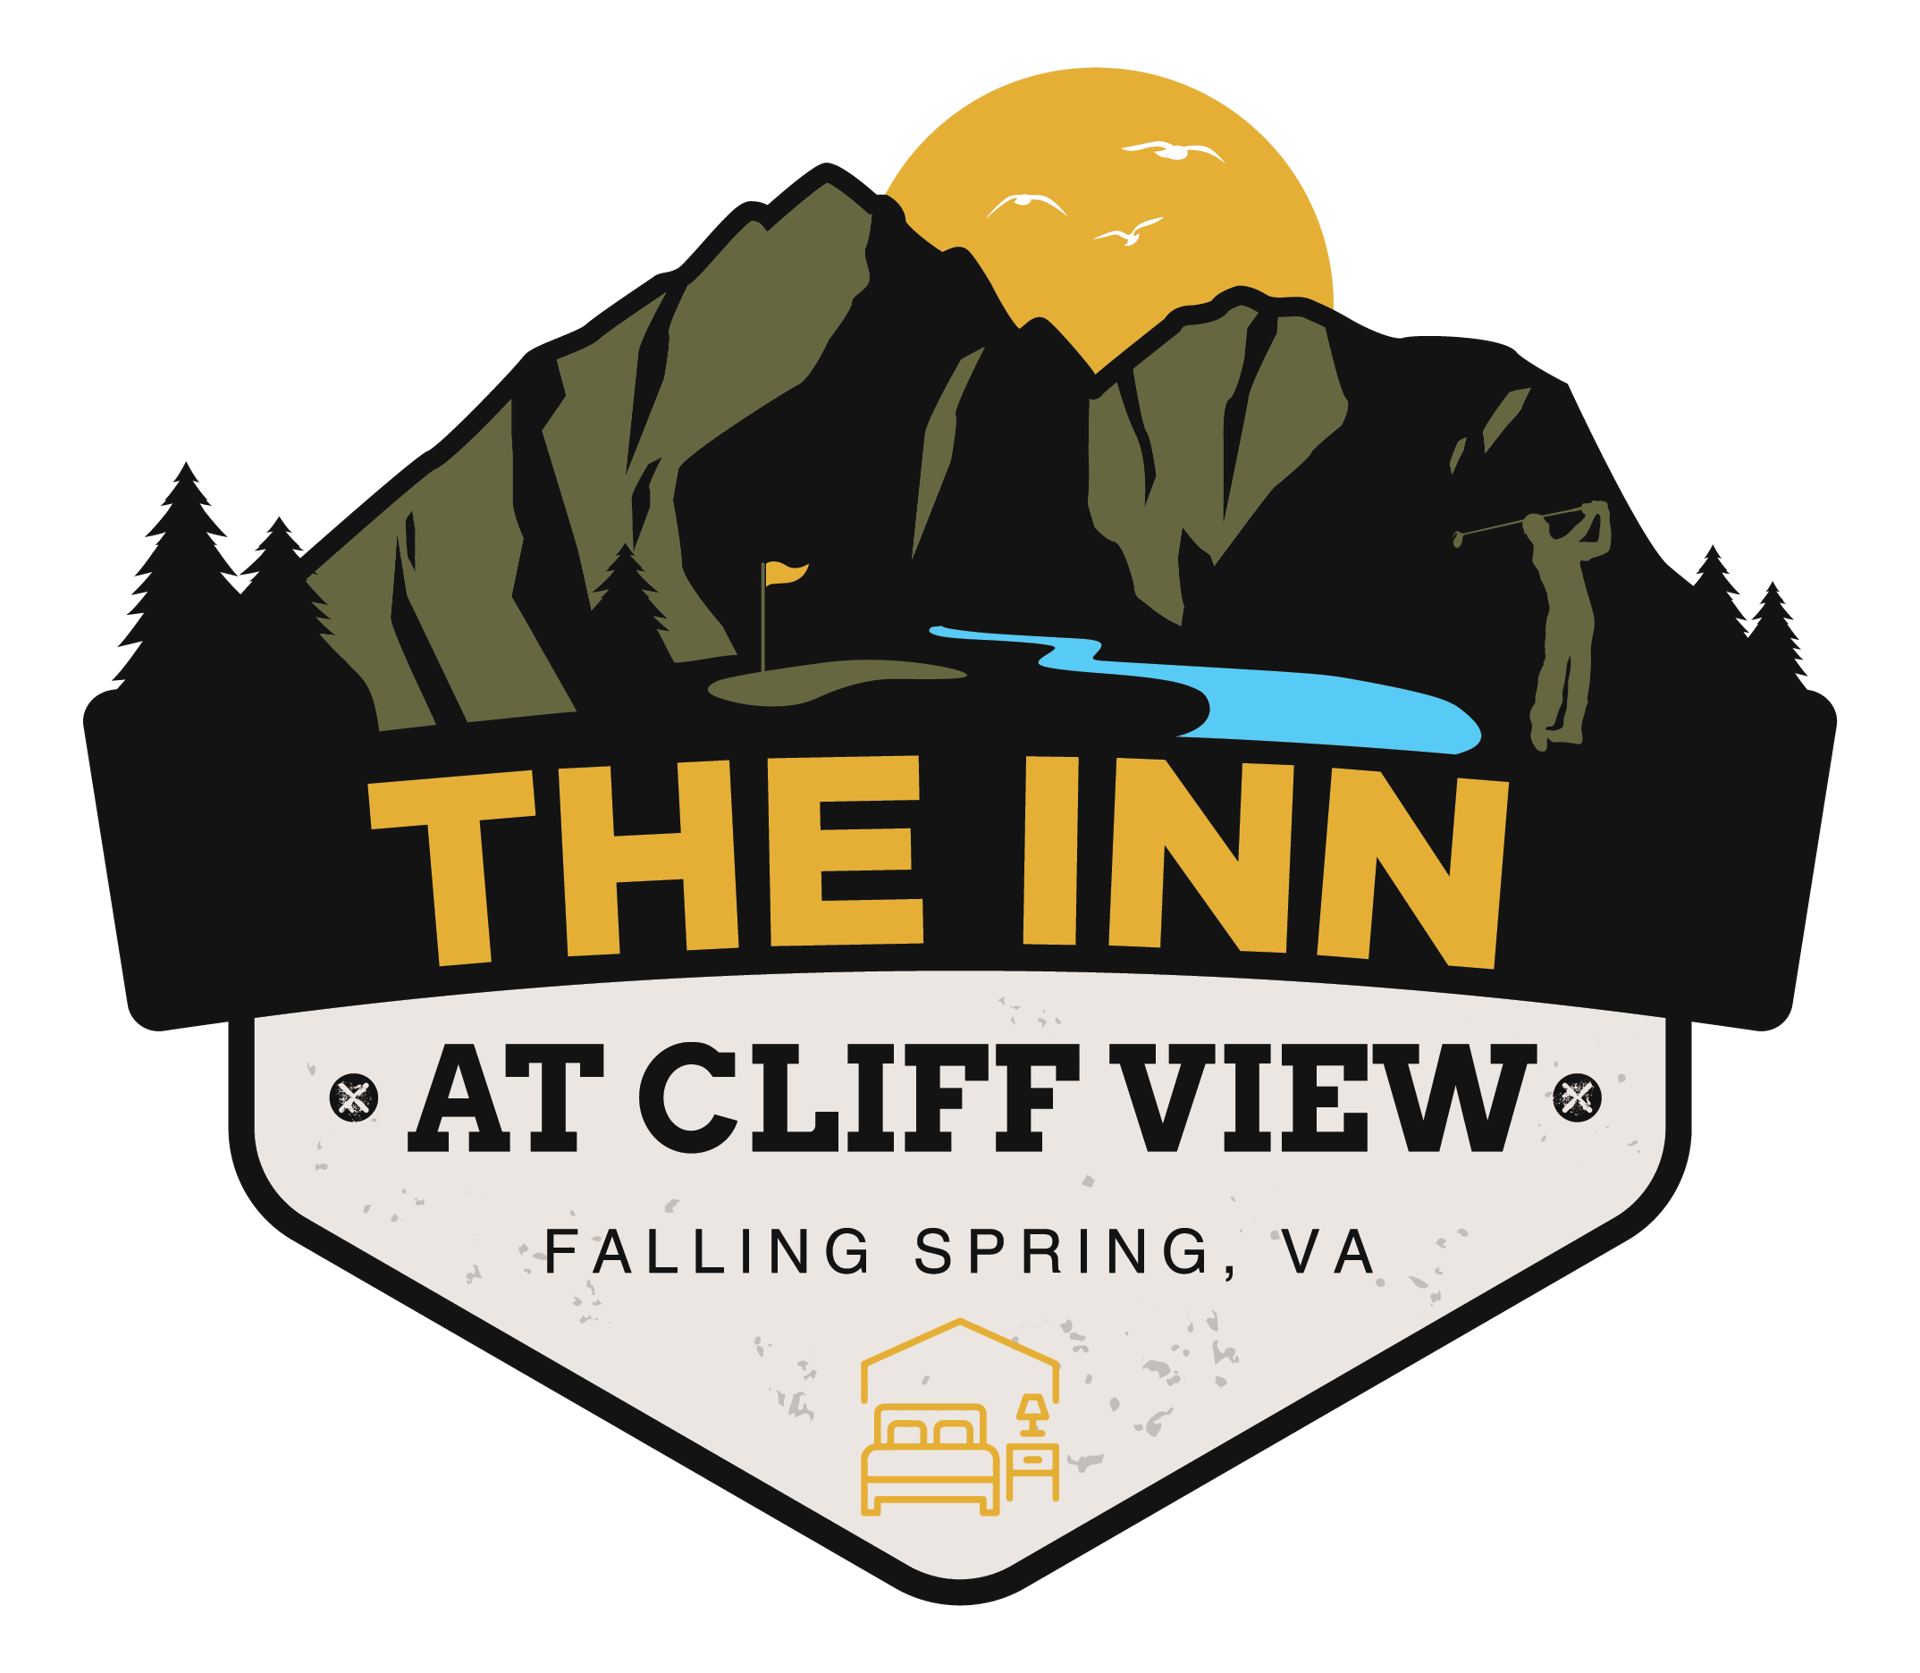 The Inn at Cliff View Falling Spring, VA